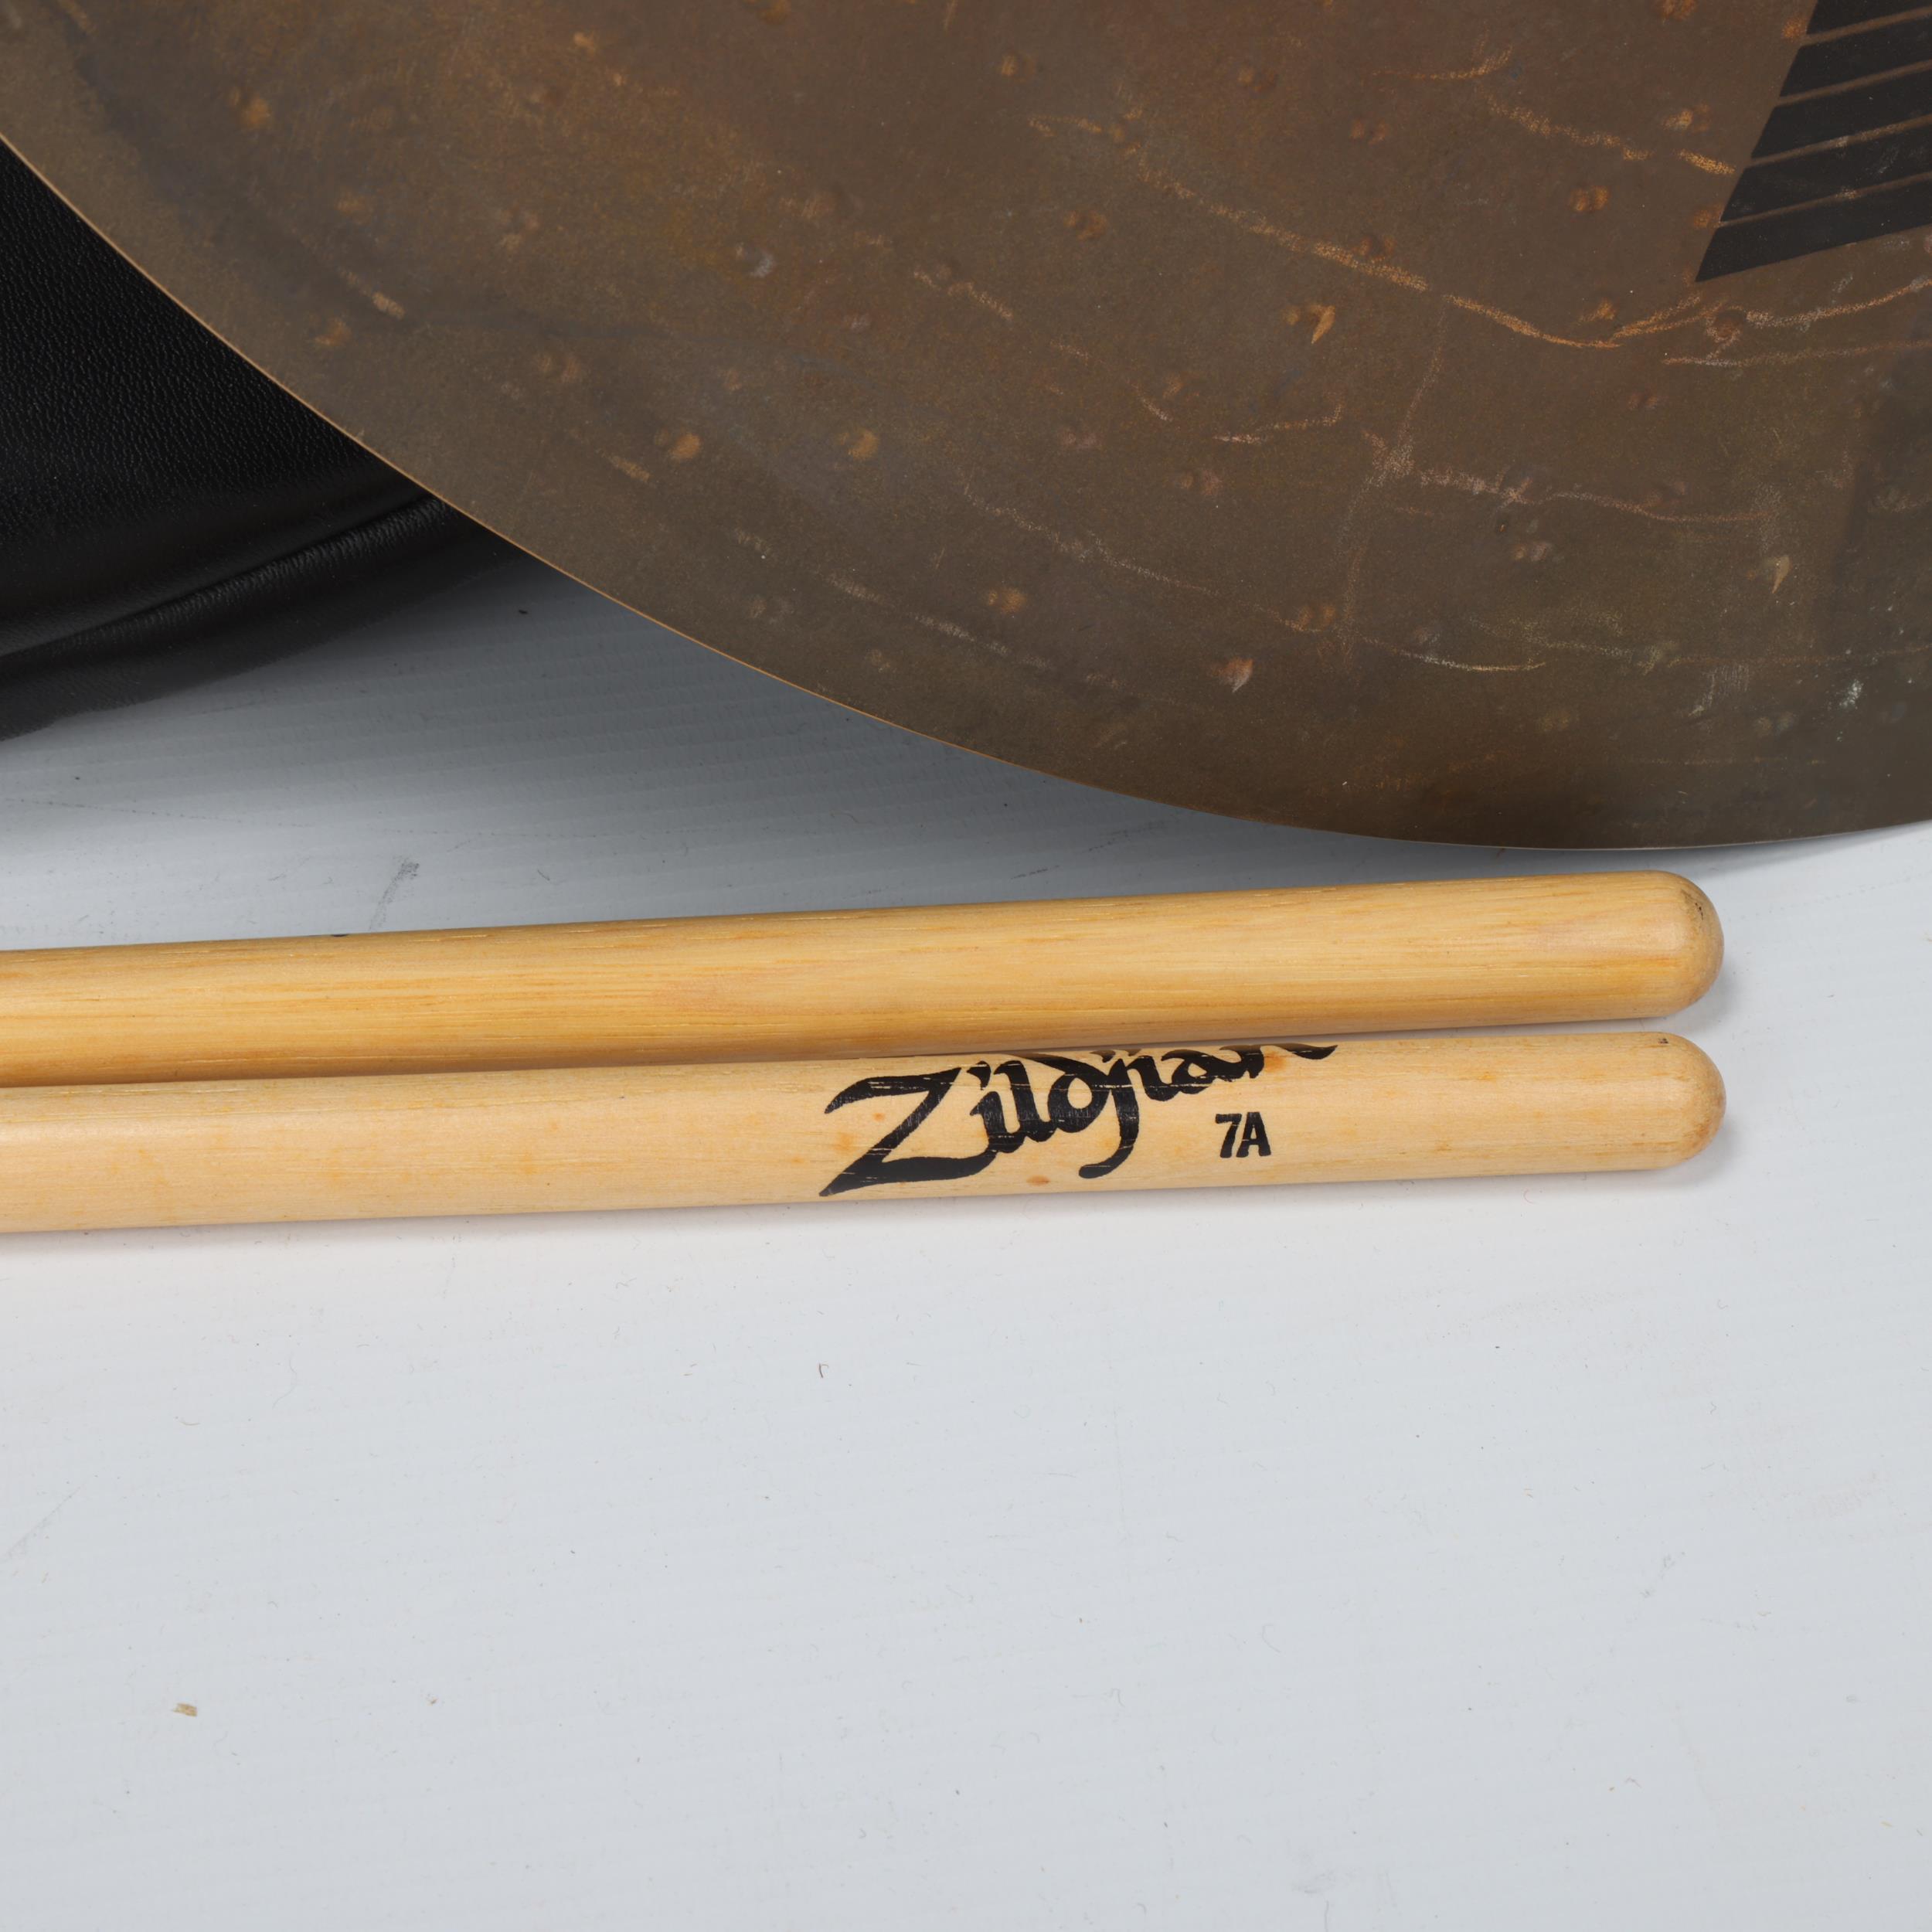 JIMI HENDRIX EXPERIENCE Zildjian Cymbal (1) Owned by MITCH MITCHELL. One 20inch Zildjian Custom - Image 3 of 3